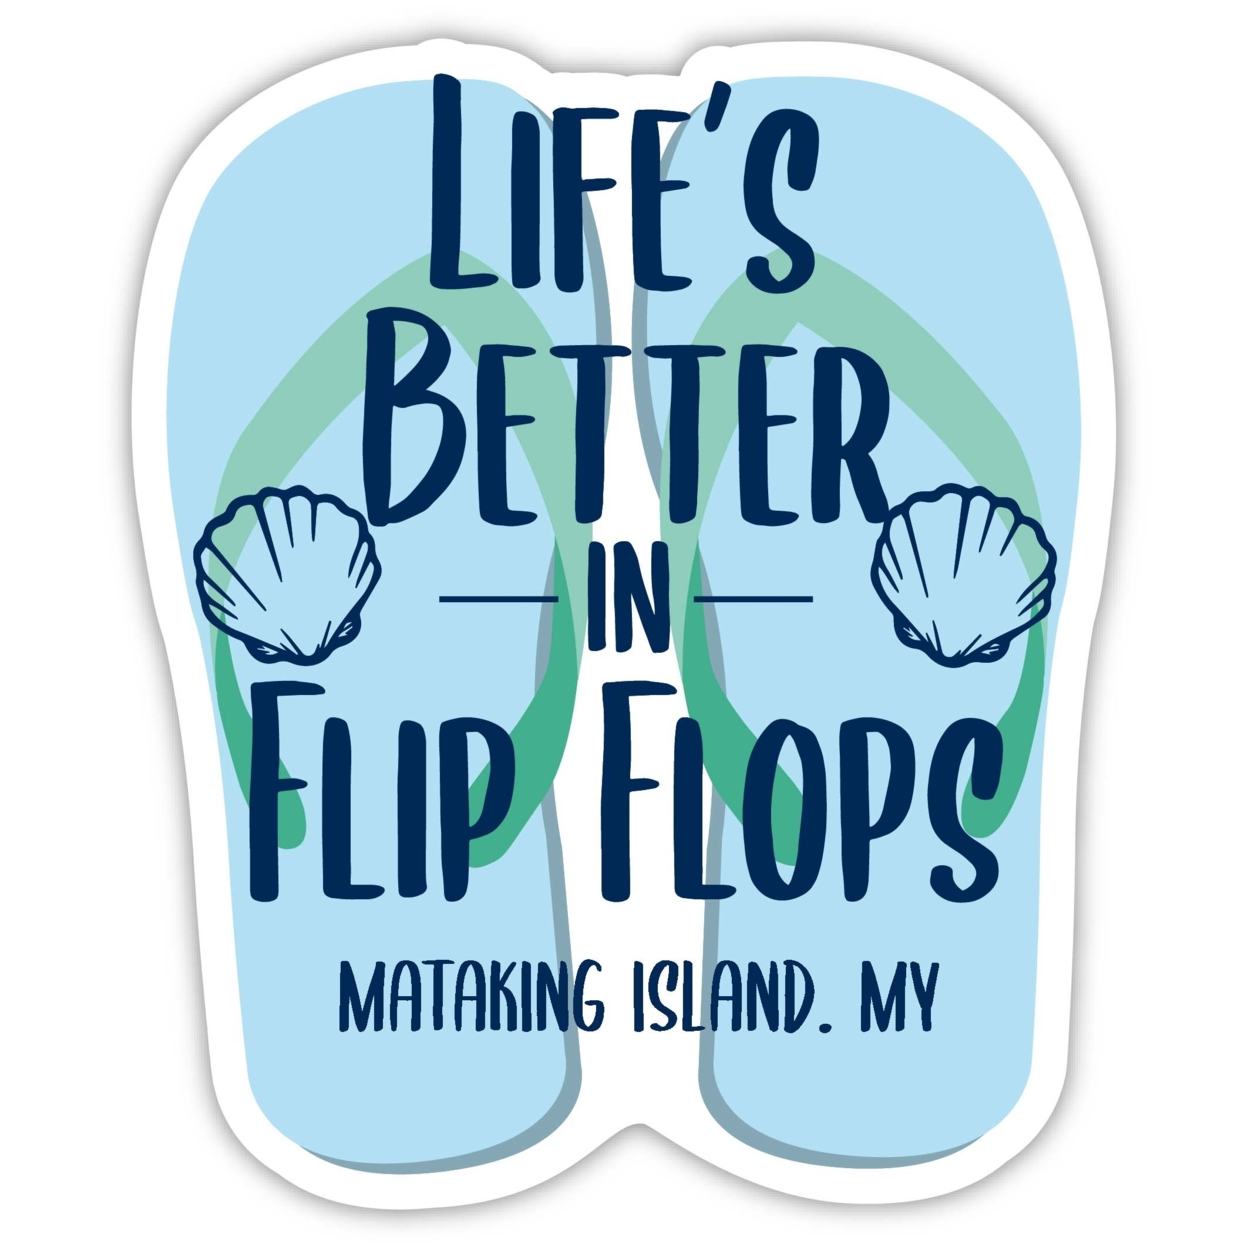 Mataking Island Malaysia Souvenir 4 Inch Vinyl Decal Sticker Flip Flop Design